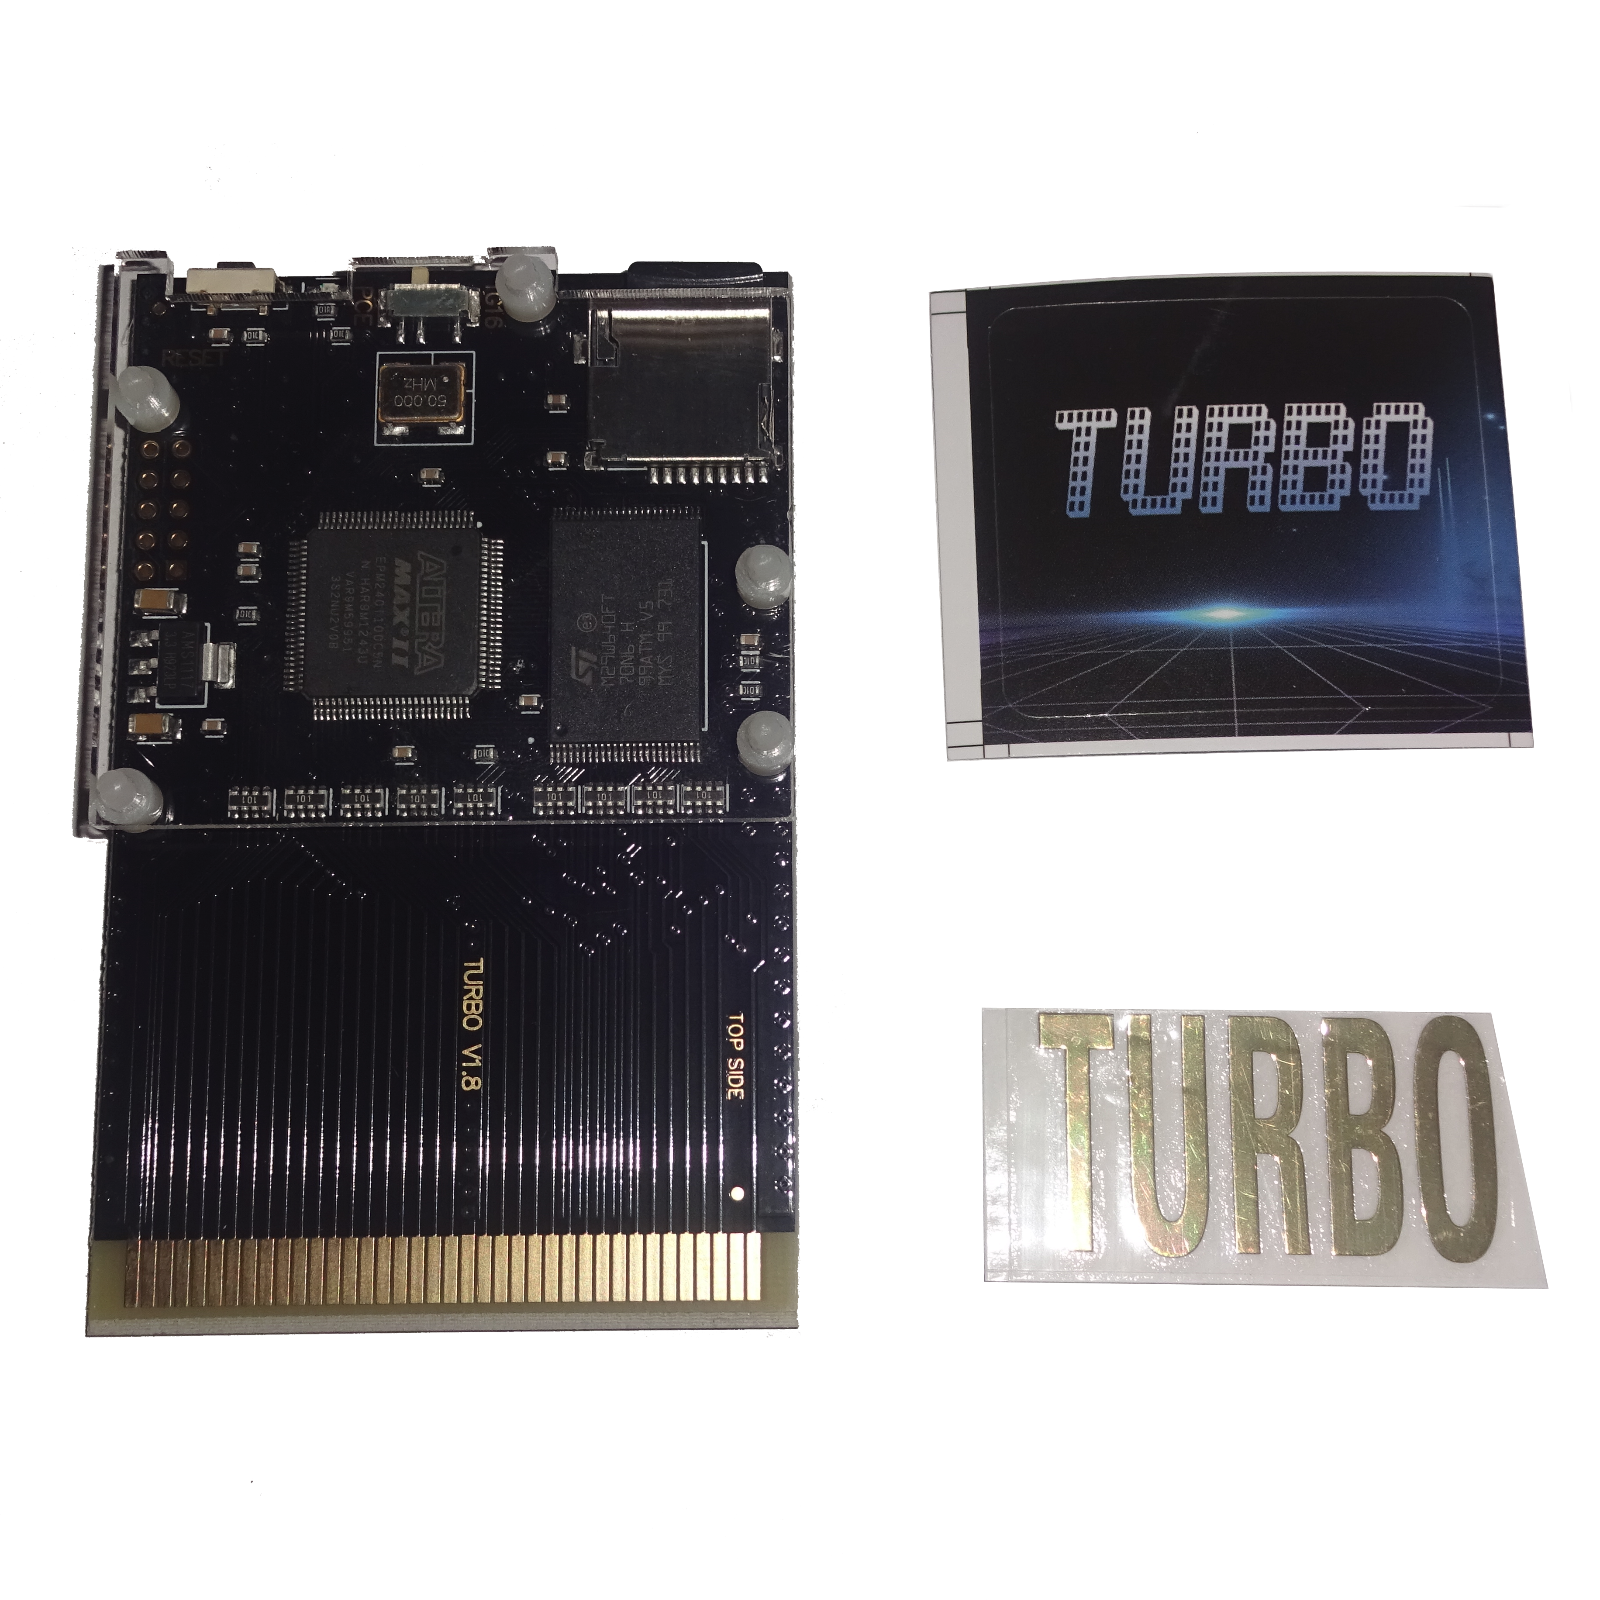 600 in 1 PCE Turbo GrafX Game Cartridge for PC-Engine Turbo GrafX